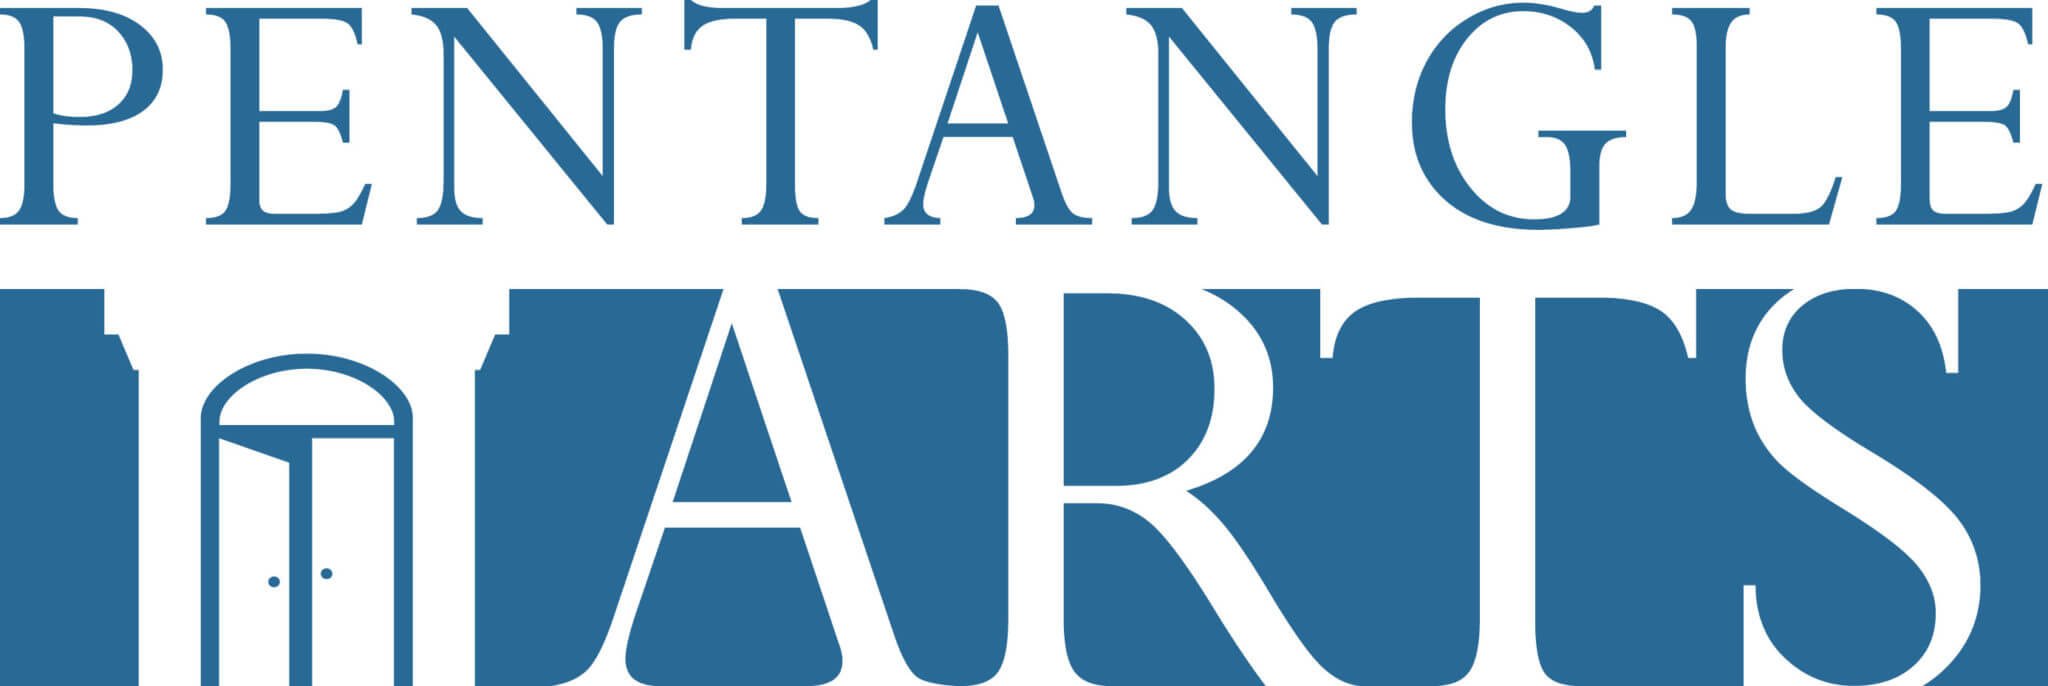 PentangleArts_Logo_B_blue.jpg